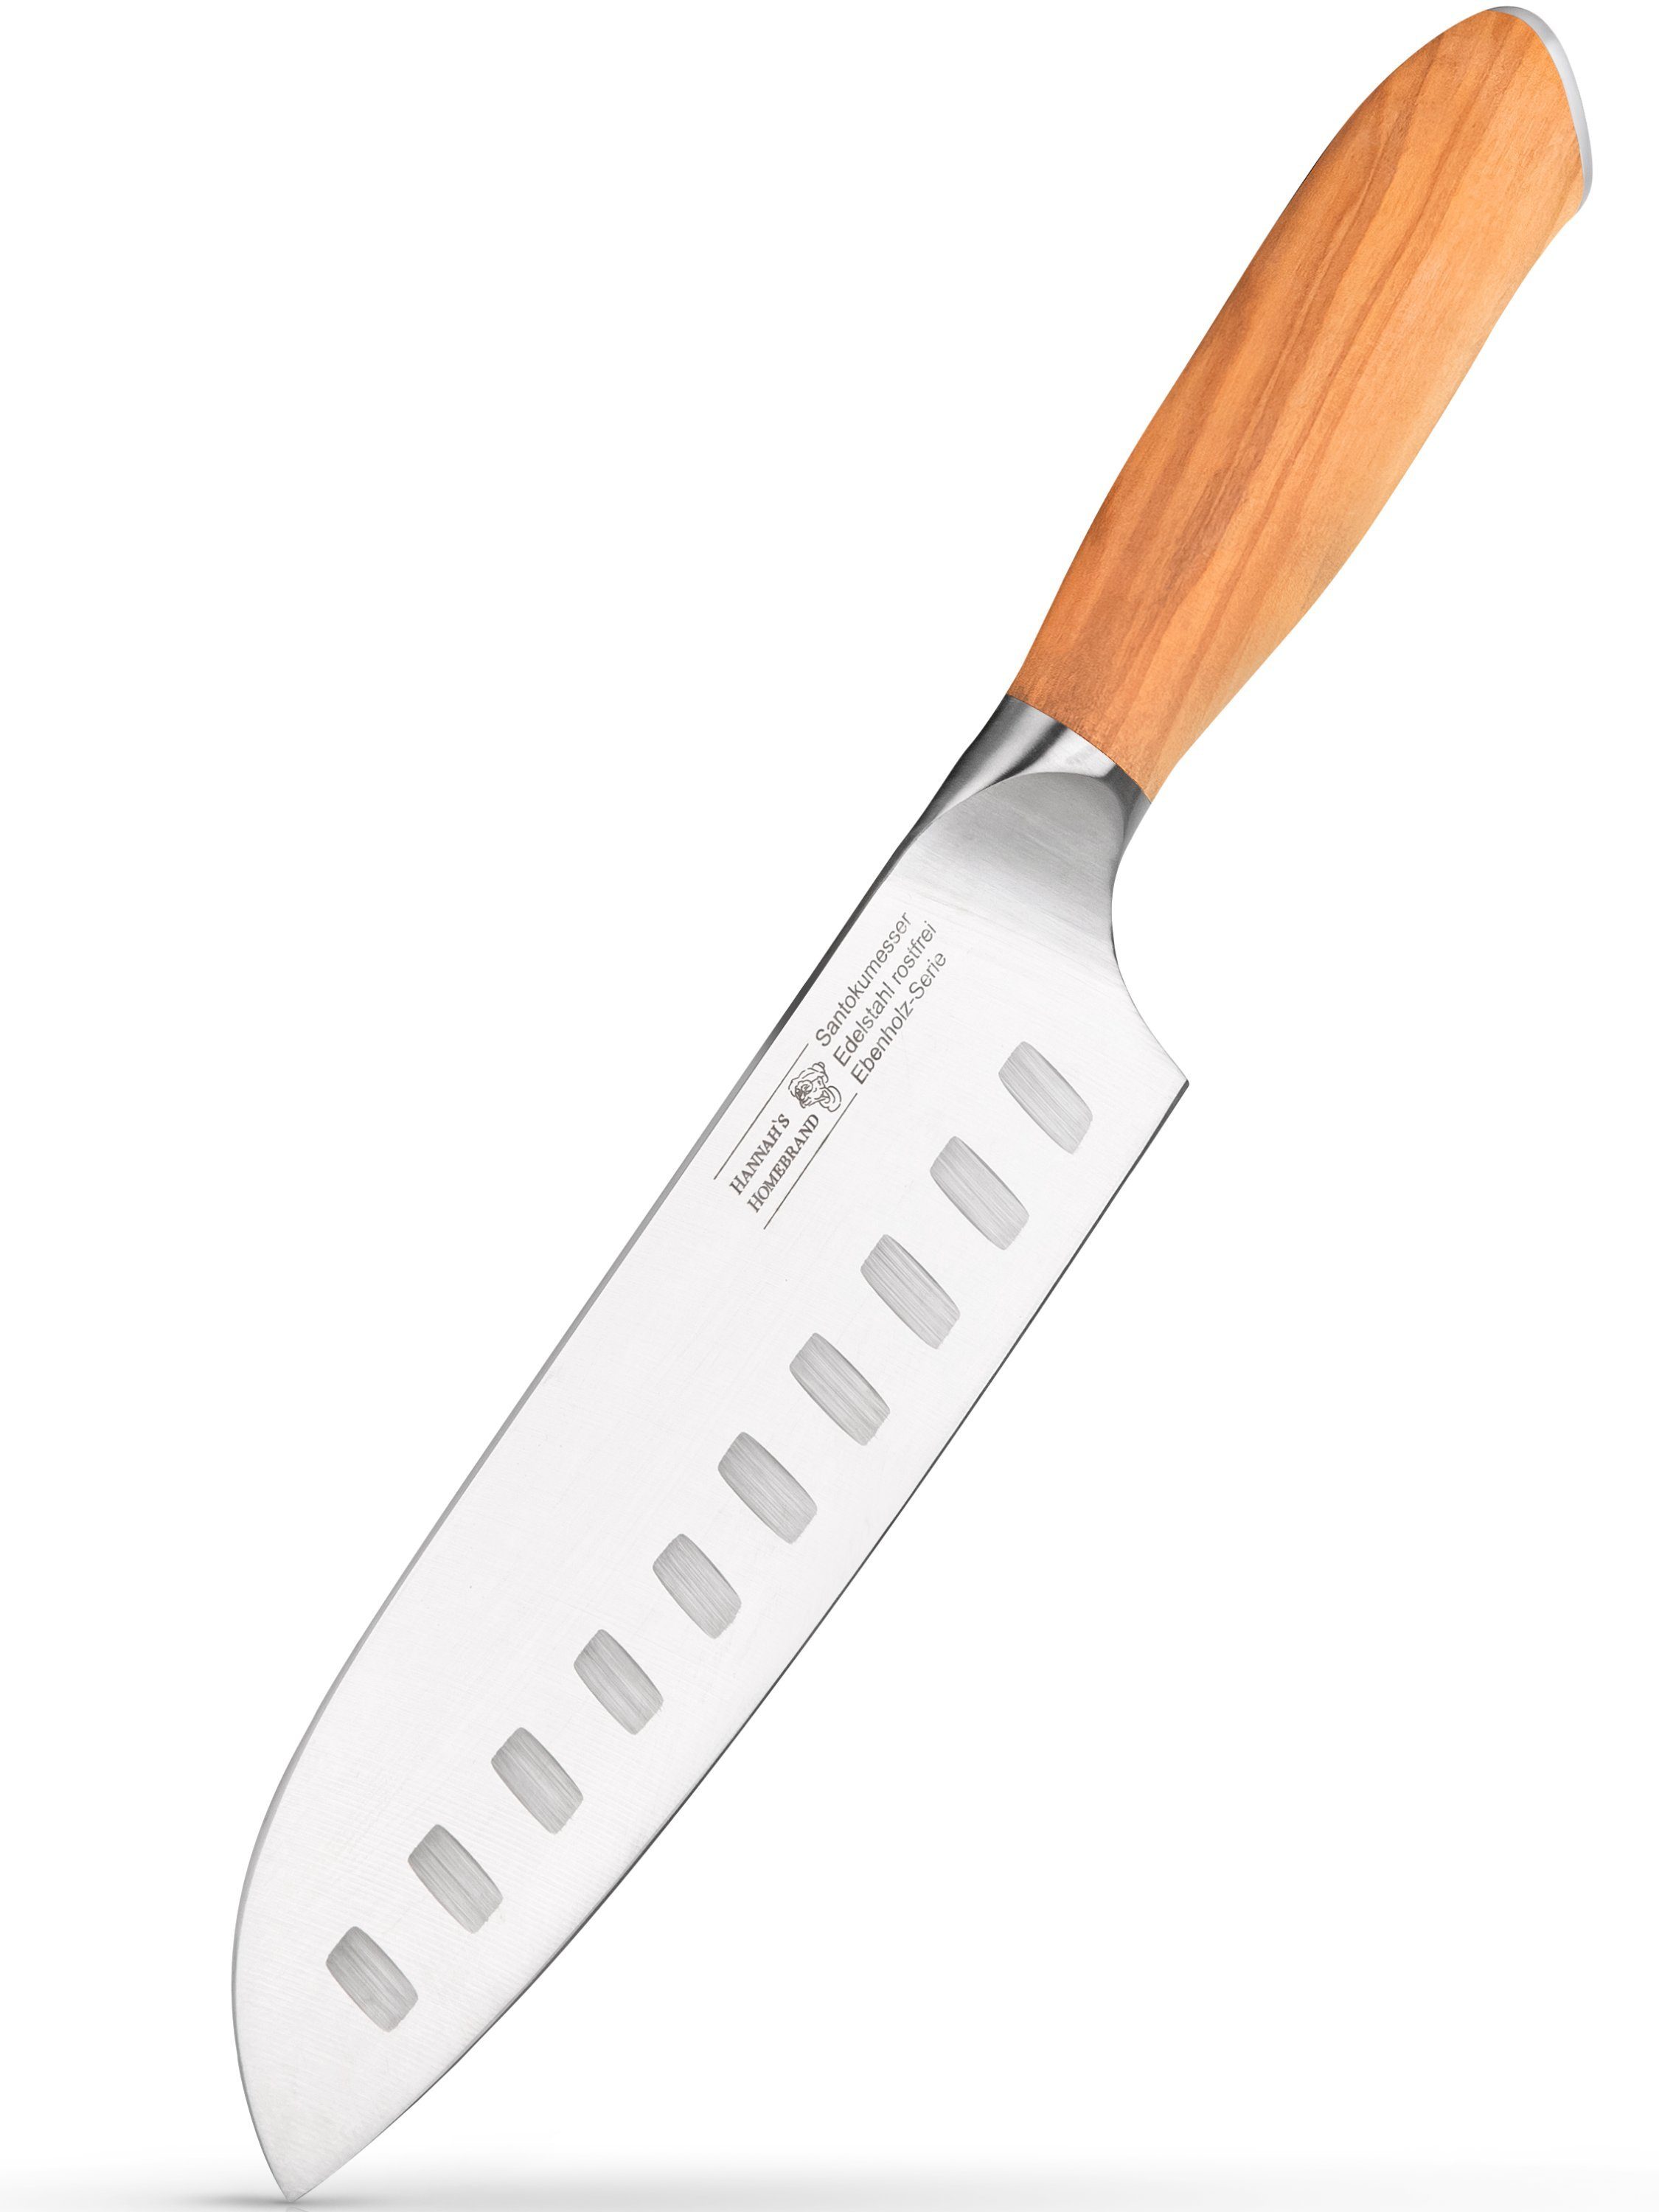 Hannah's Homebrand Santokumesser rostfreies Santokumesser & Sushi Messer aus Olivenholz, verblüffend scharf, rostfrei und langlebig (18 cm Klinge) | Santokumesser